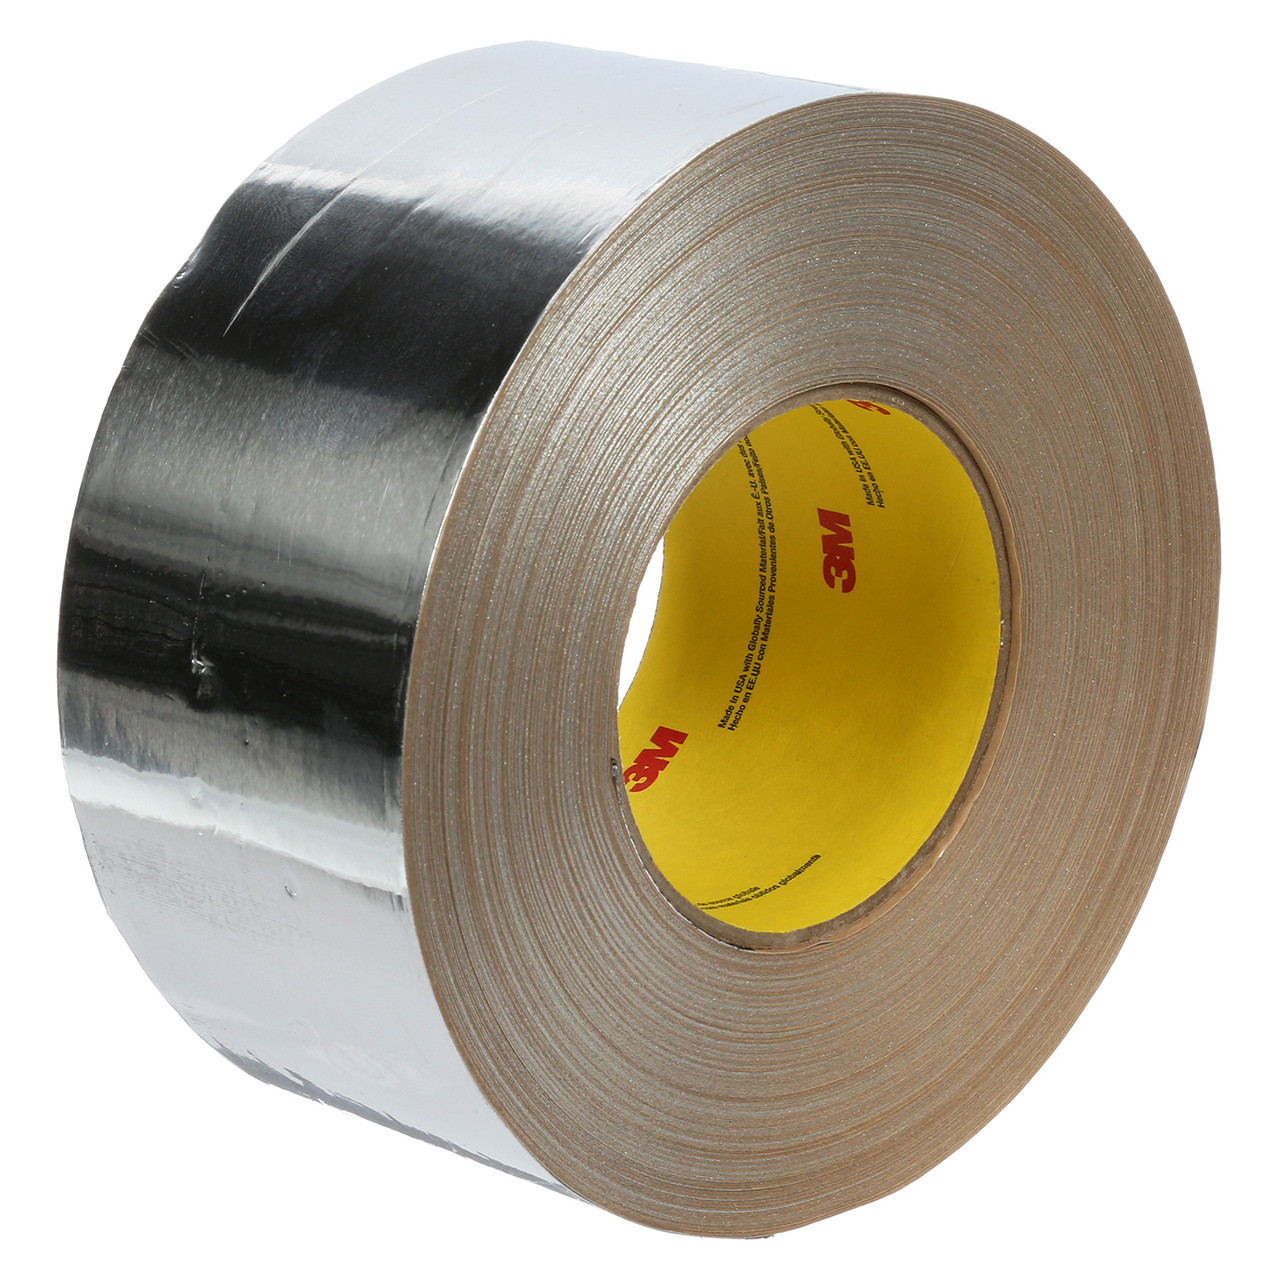 3M Venture Tape 1581A Aluminum Foil Tape